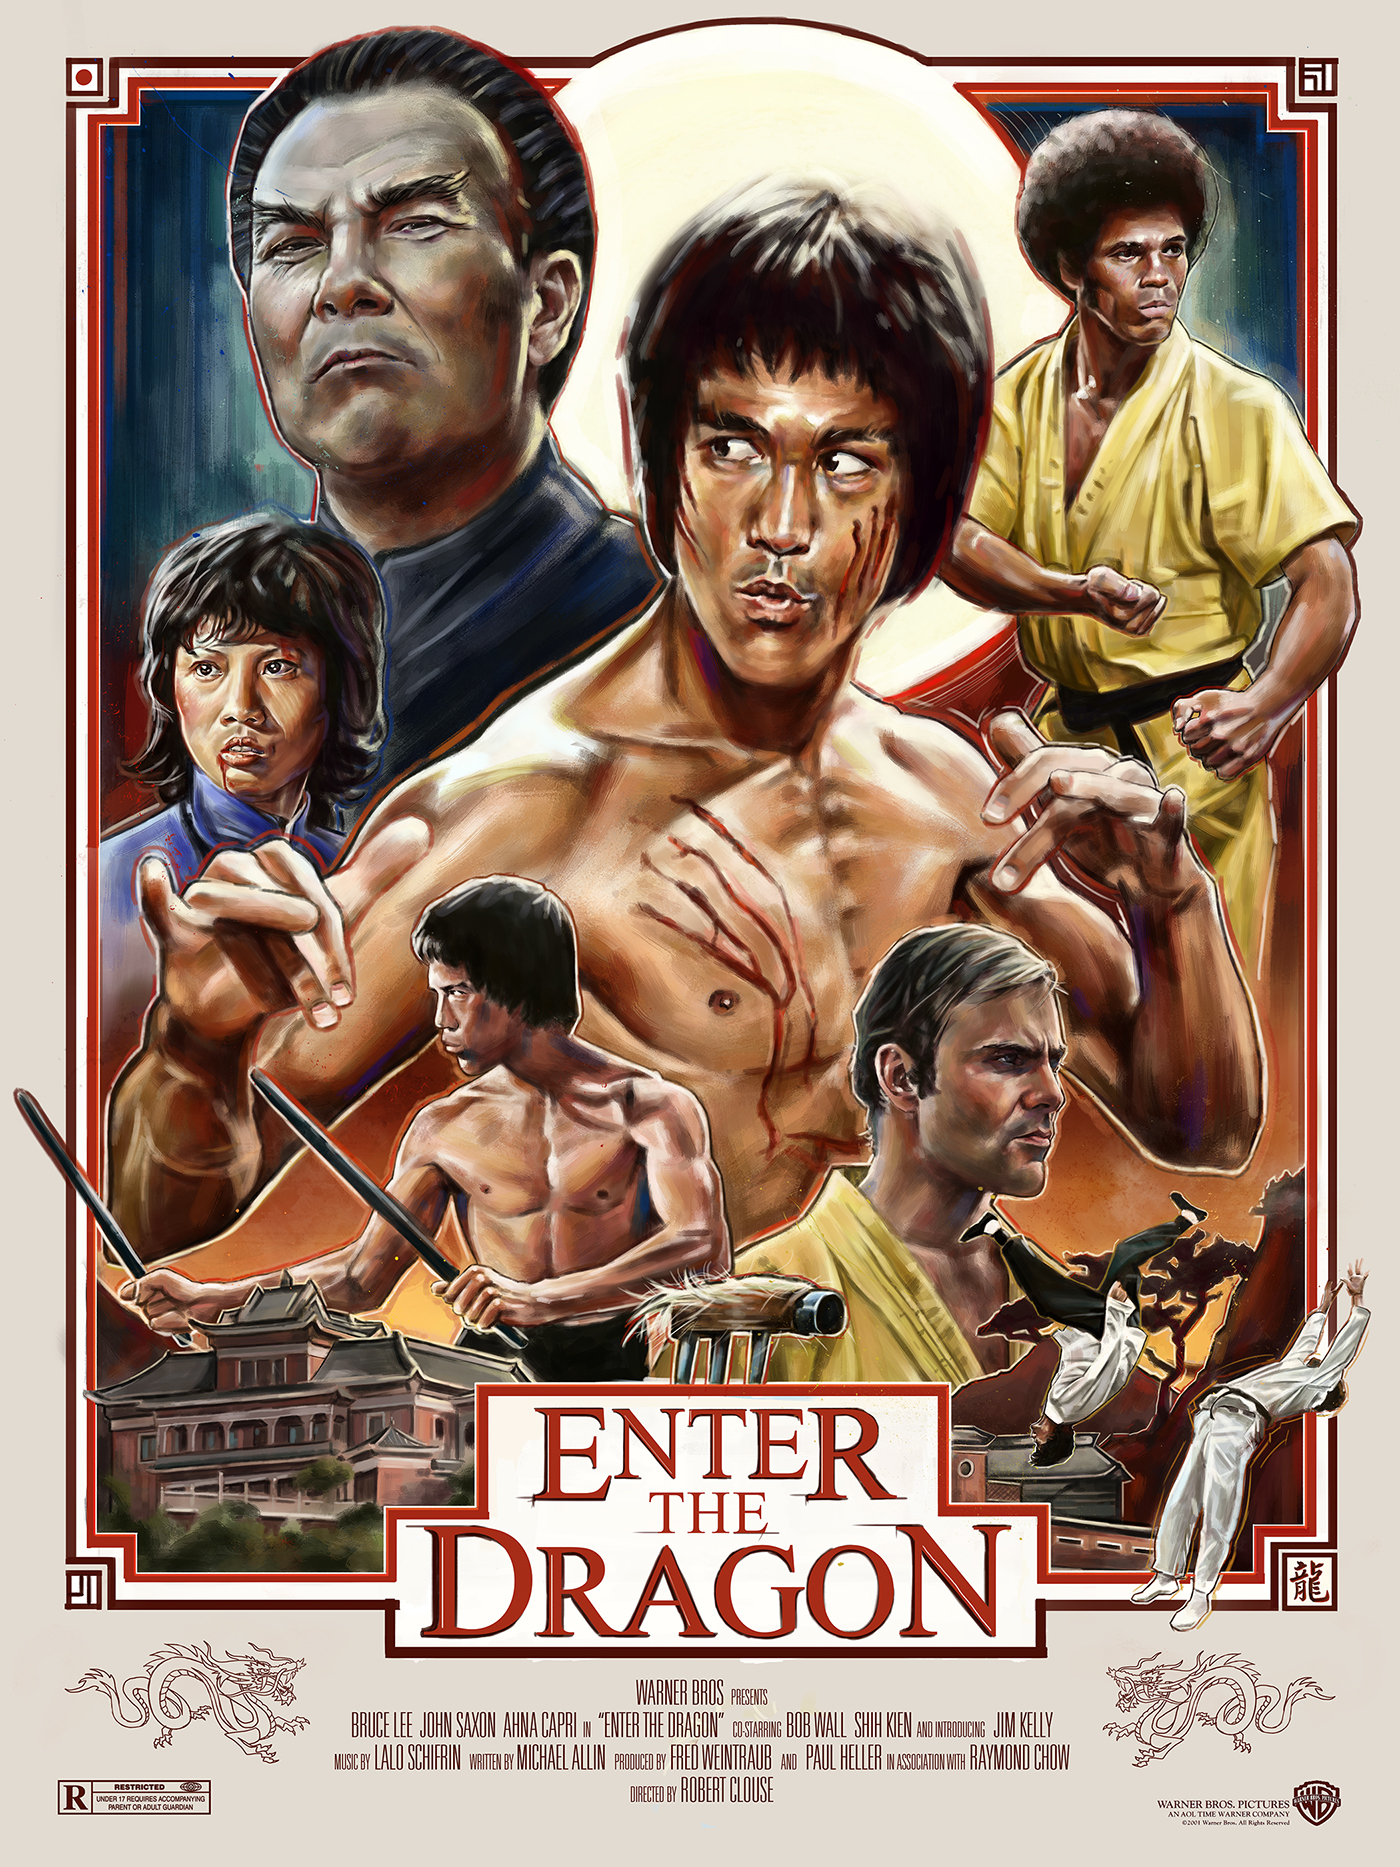 Enter the Dragon - Film Poster on Behance